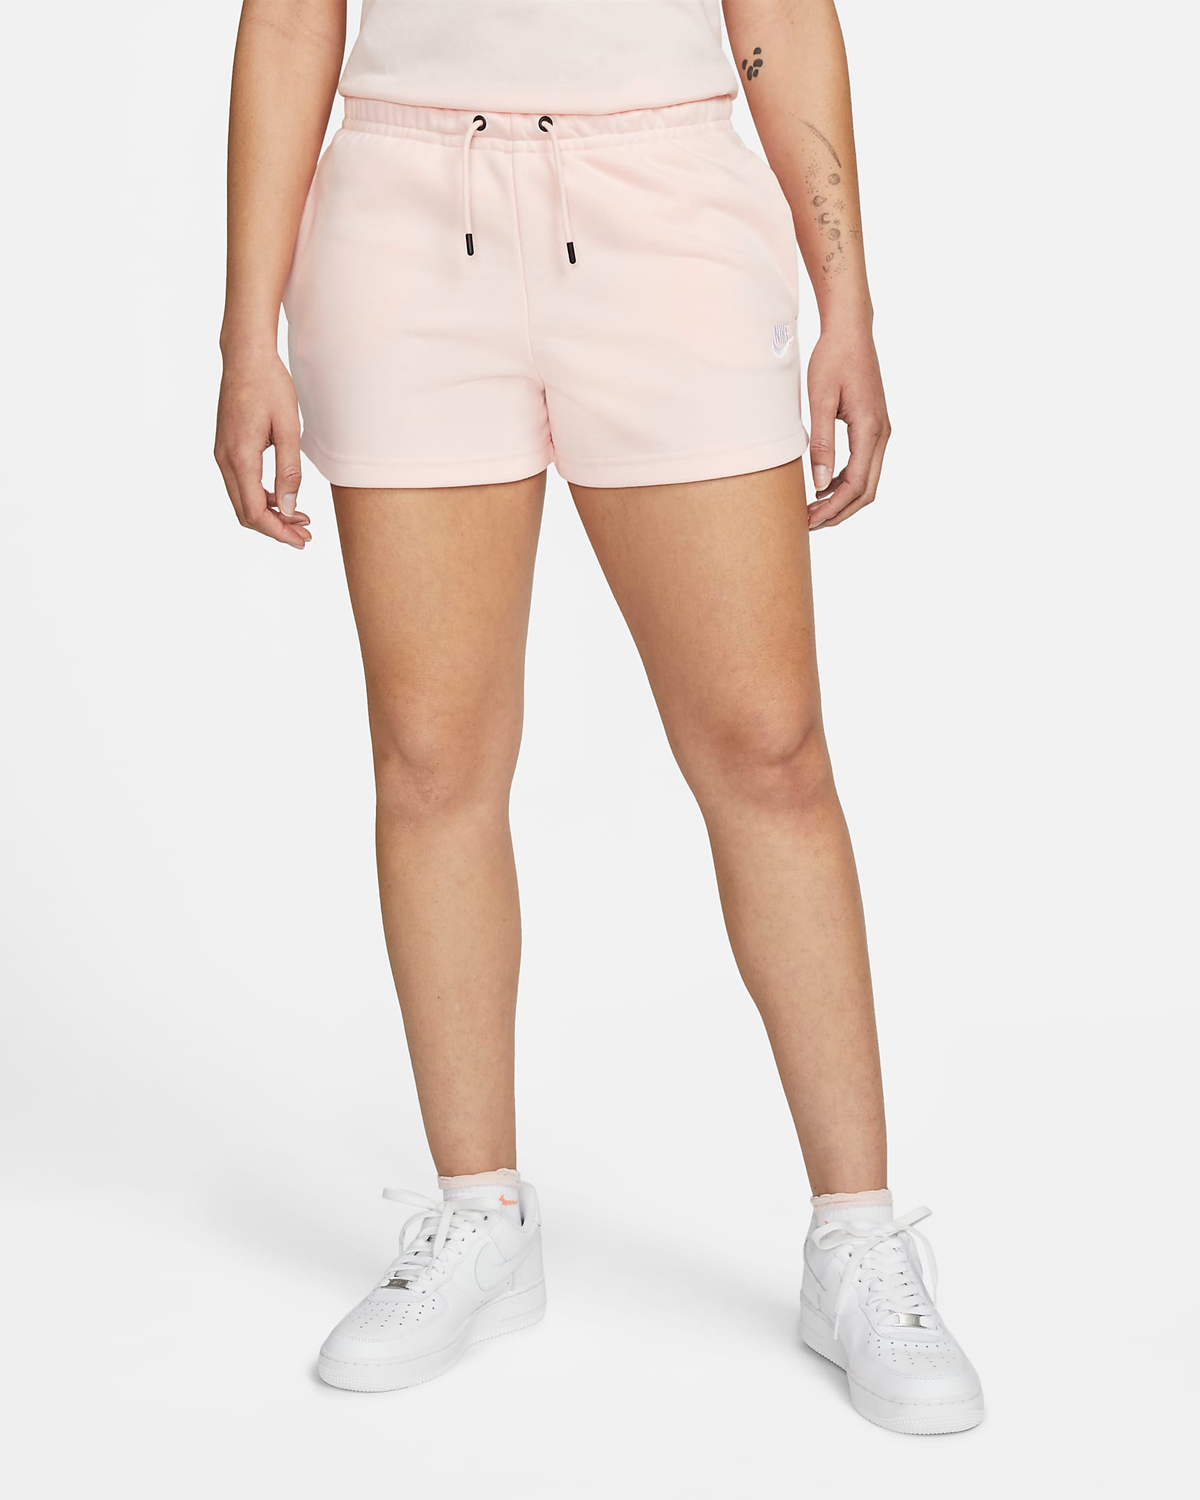 Nike-Sportswear-Womens-Shorts-Atmosphere-Pink